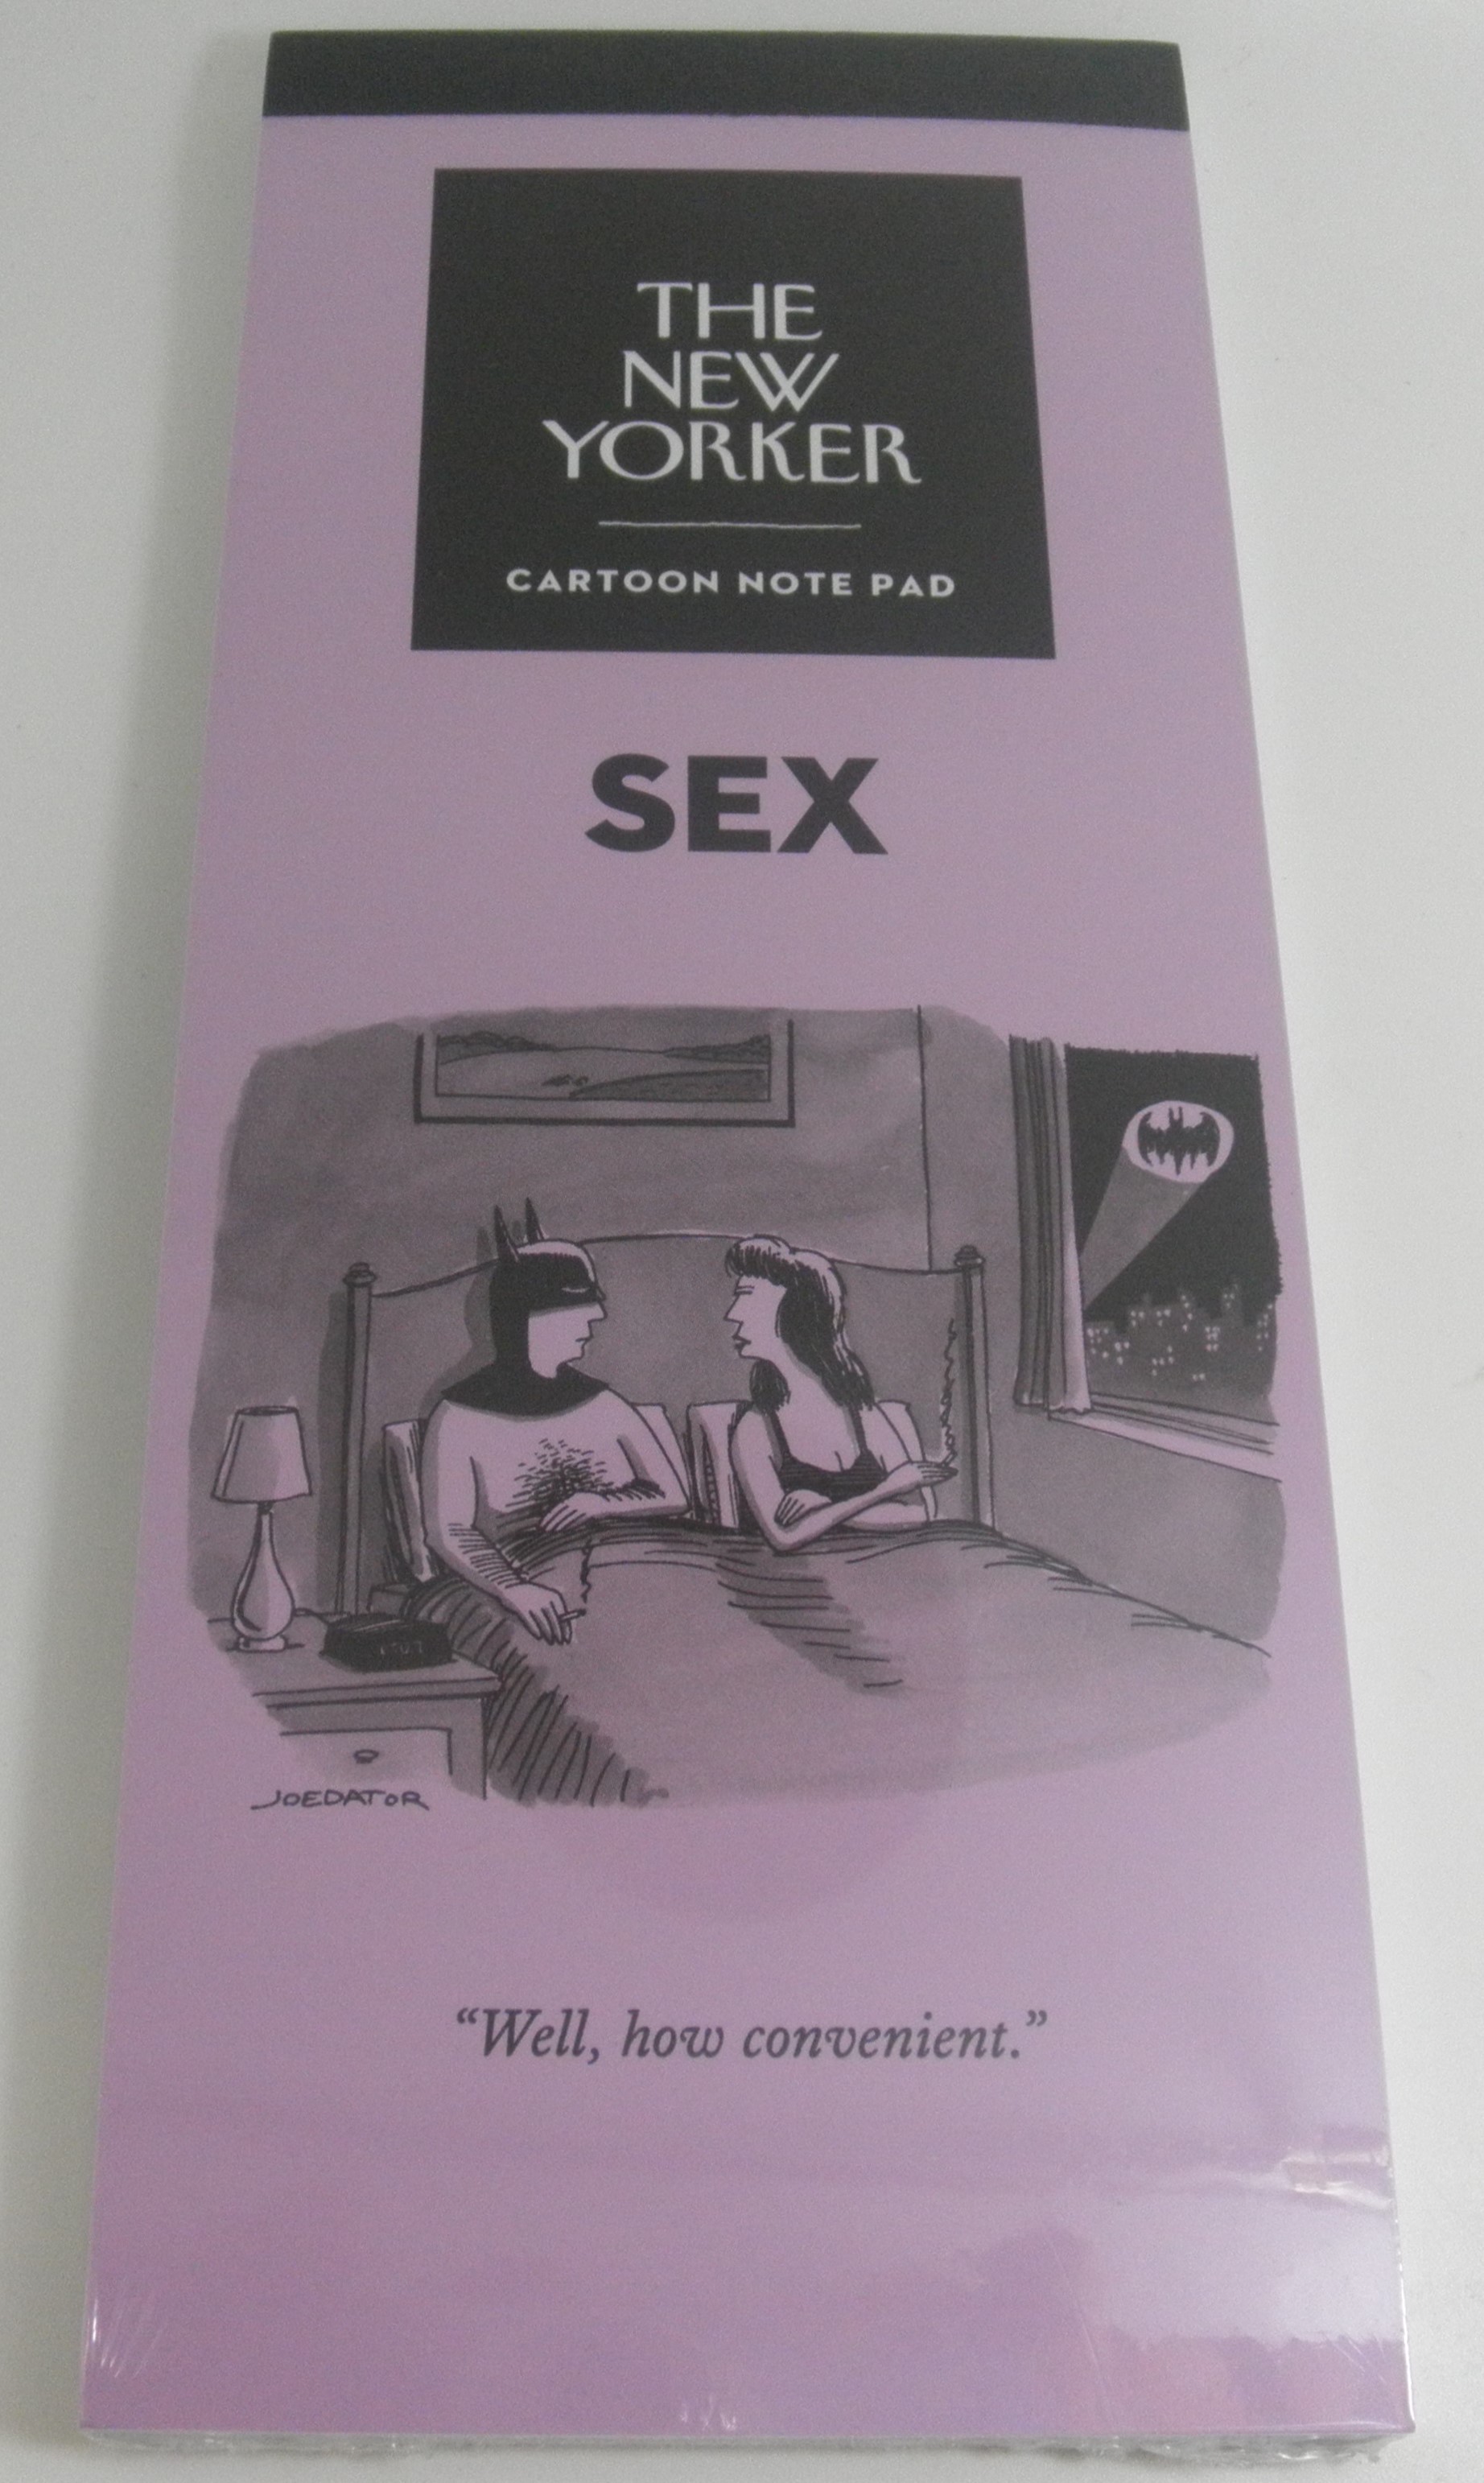 The New Yorker Cartoon Notepad Sex